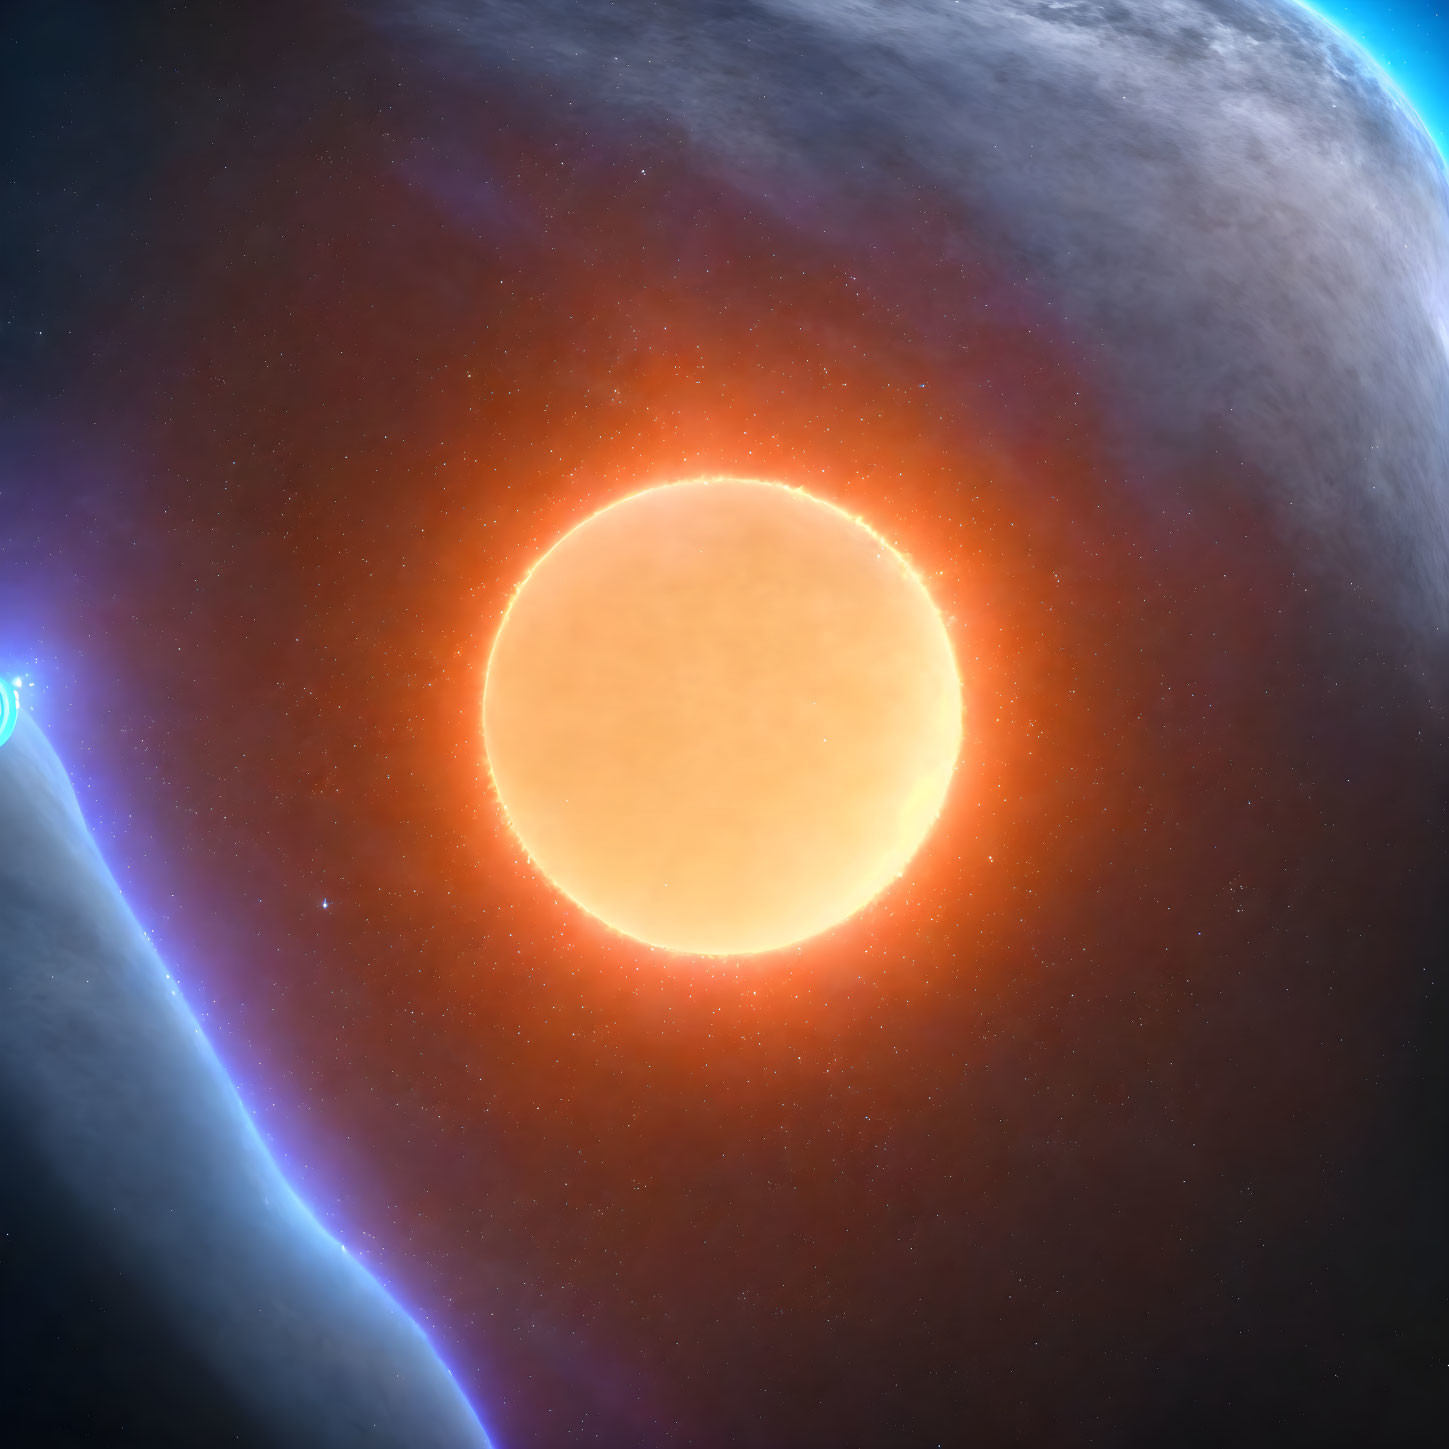 Bright orange star shines behind dark planet in cosmic scene.